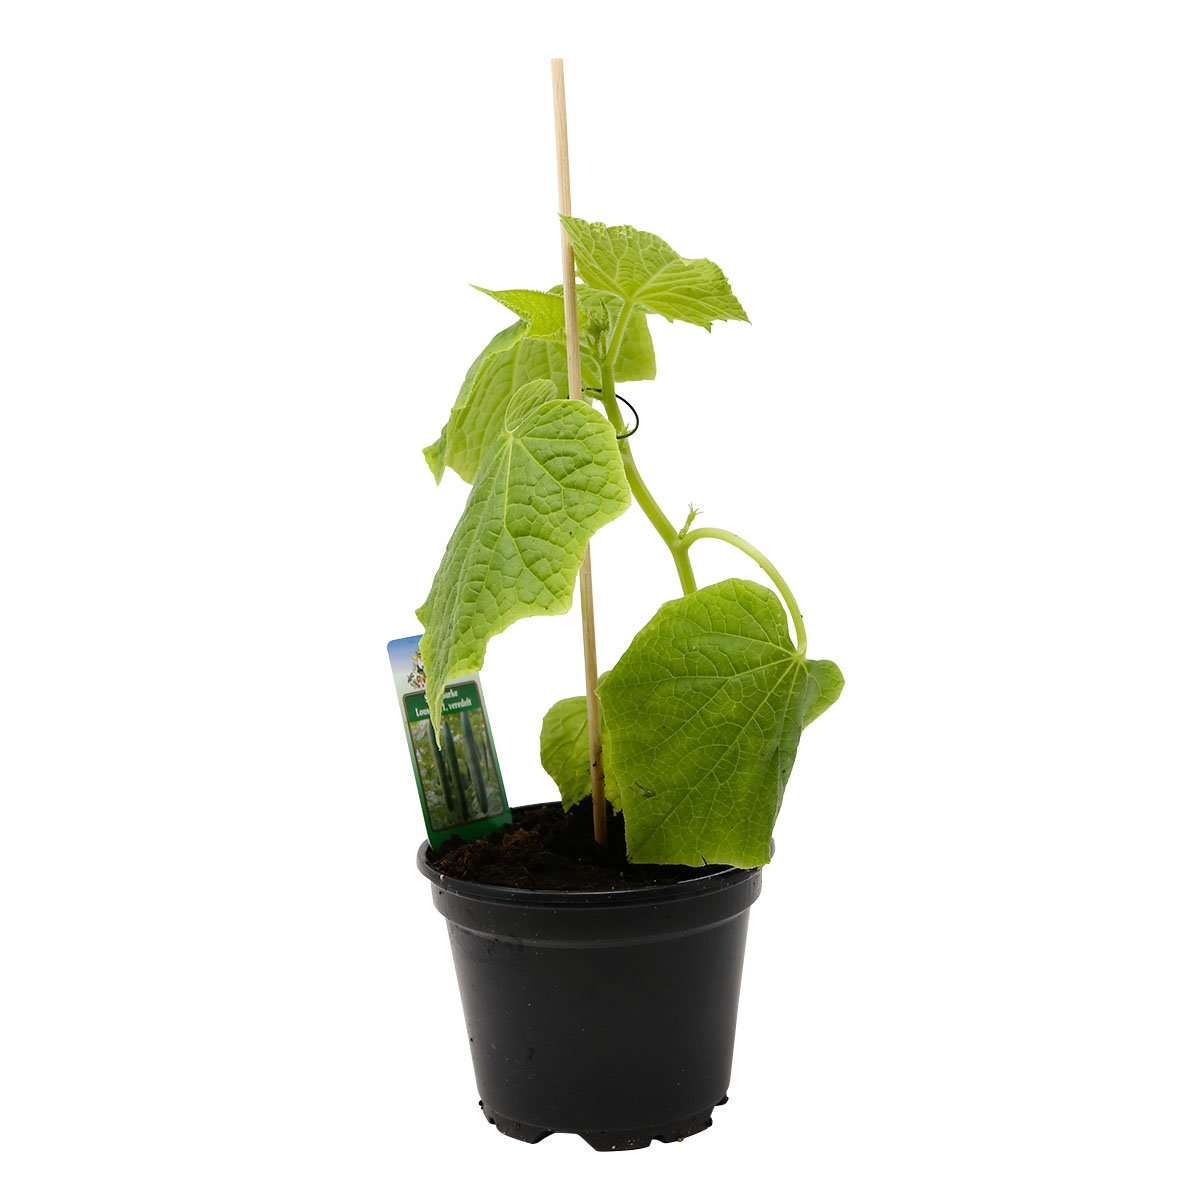 Gurkenpflanze Loustik, veredelt, im ca. 11 cm-Topf
| #6